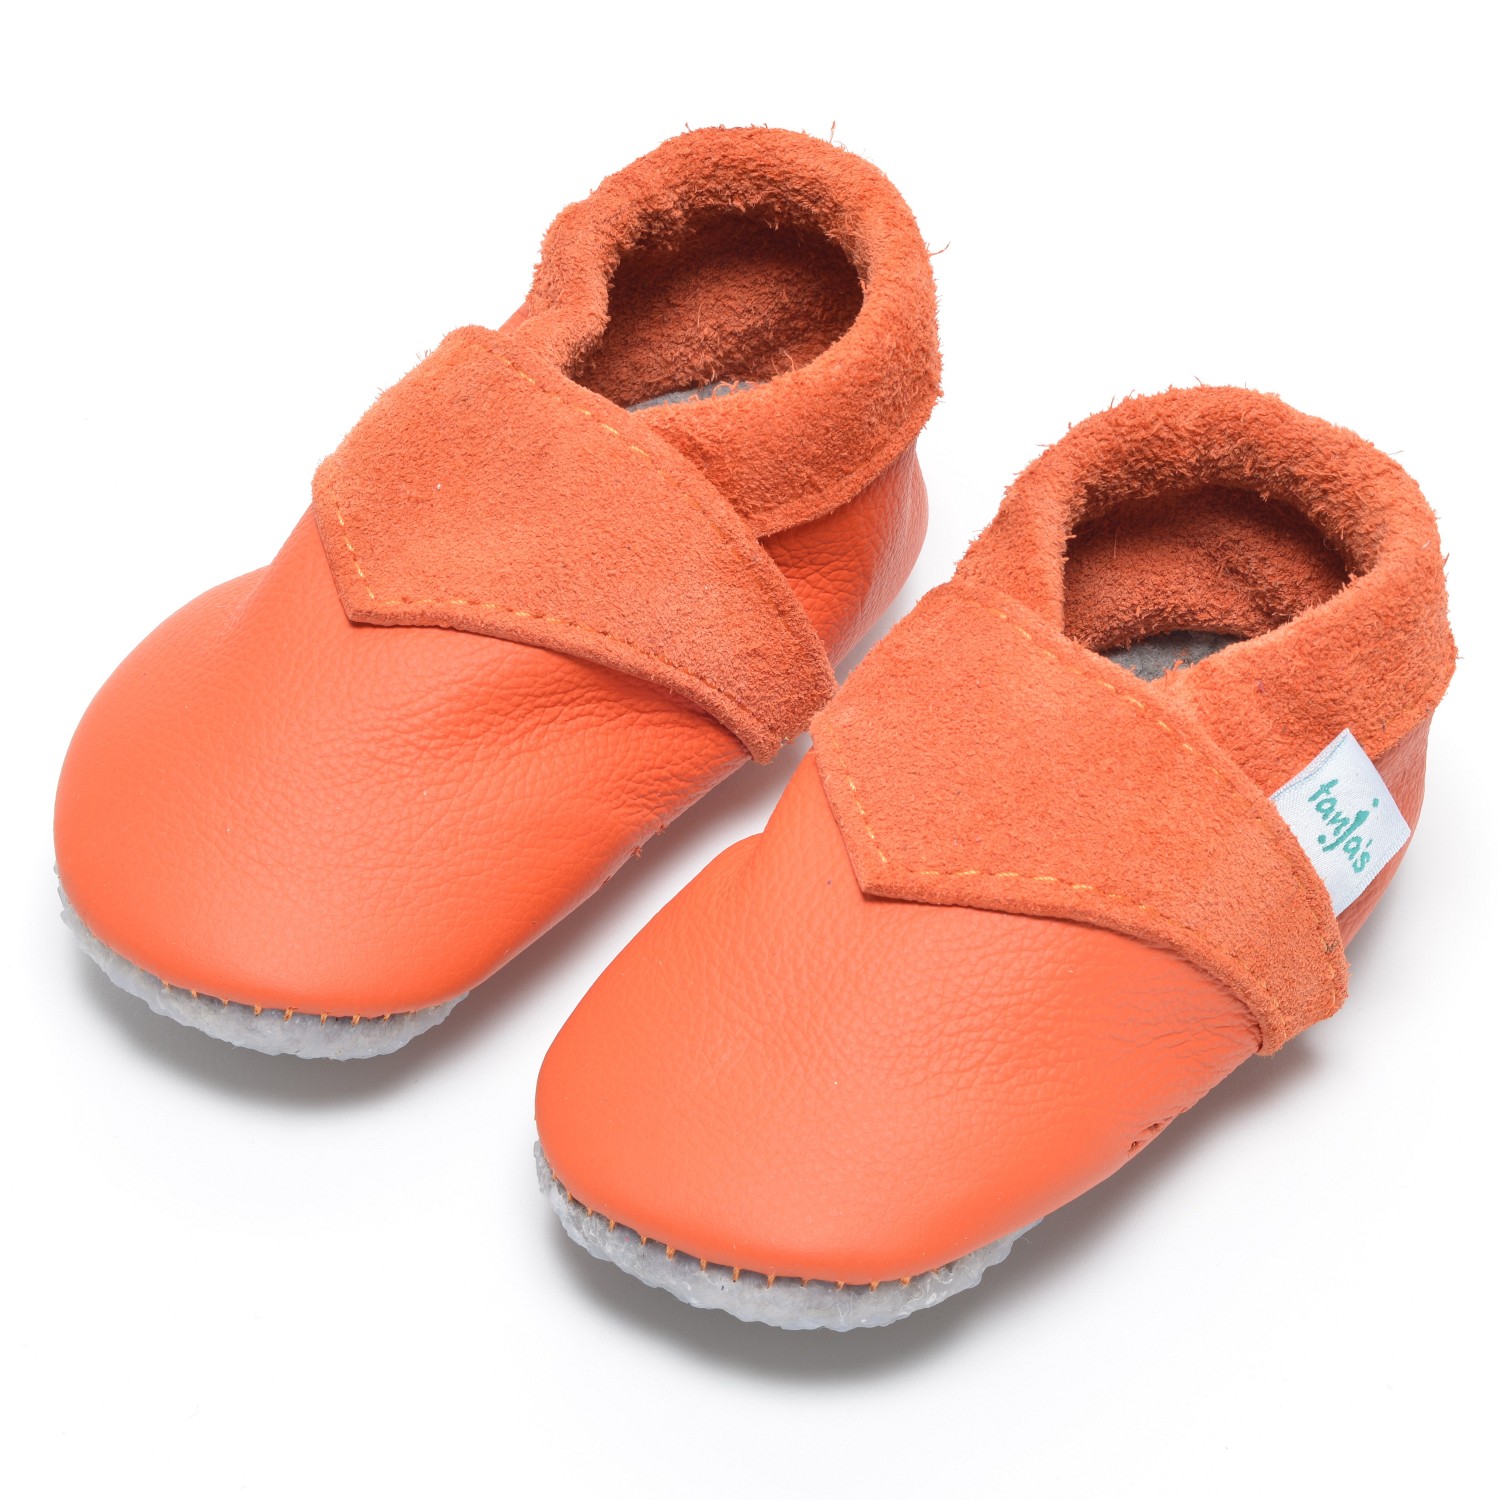 Baby-Lederschuhe "Lieblingsfarbe", orange